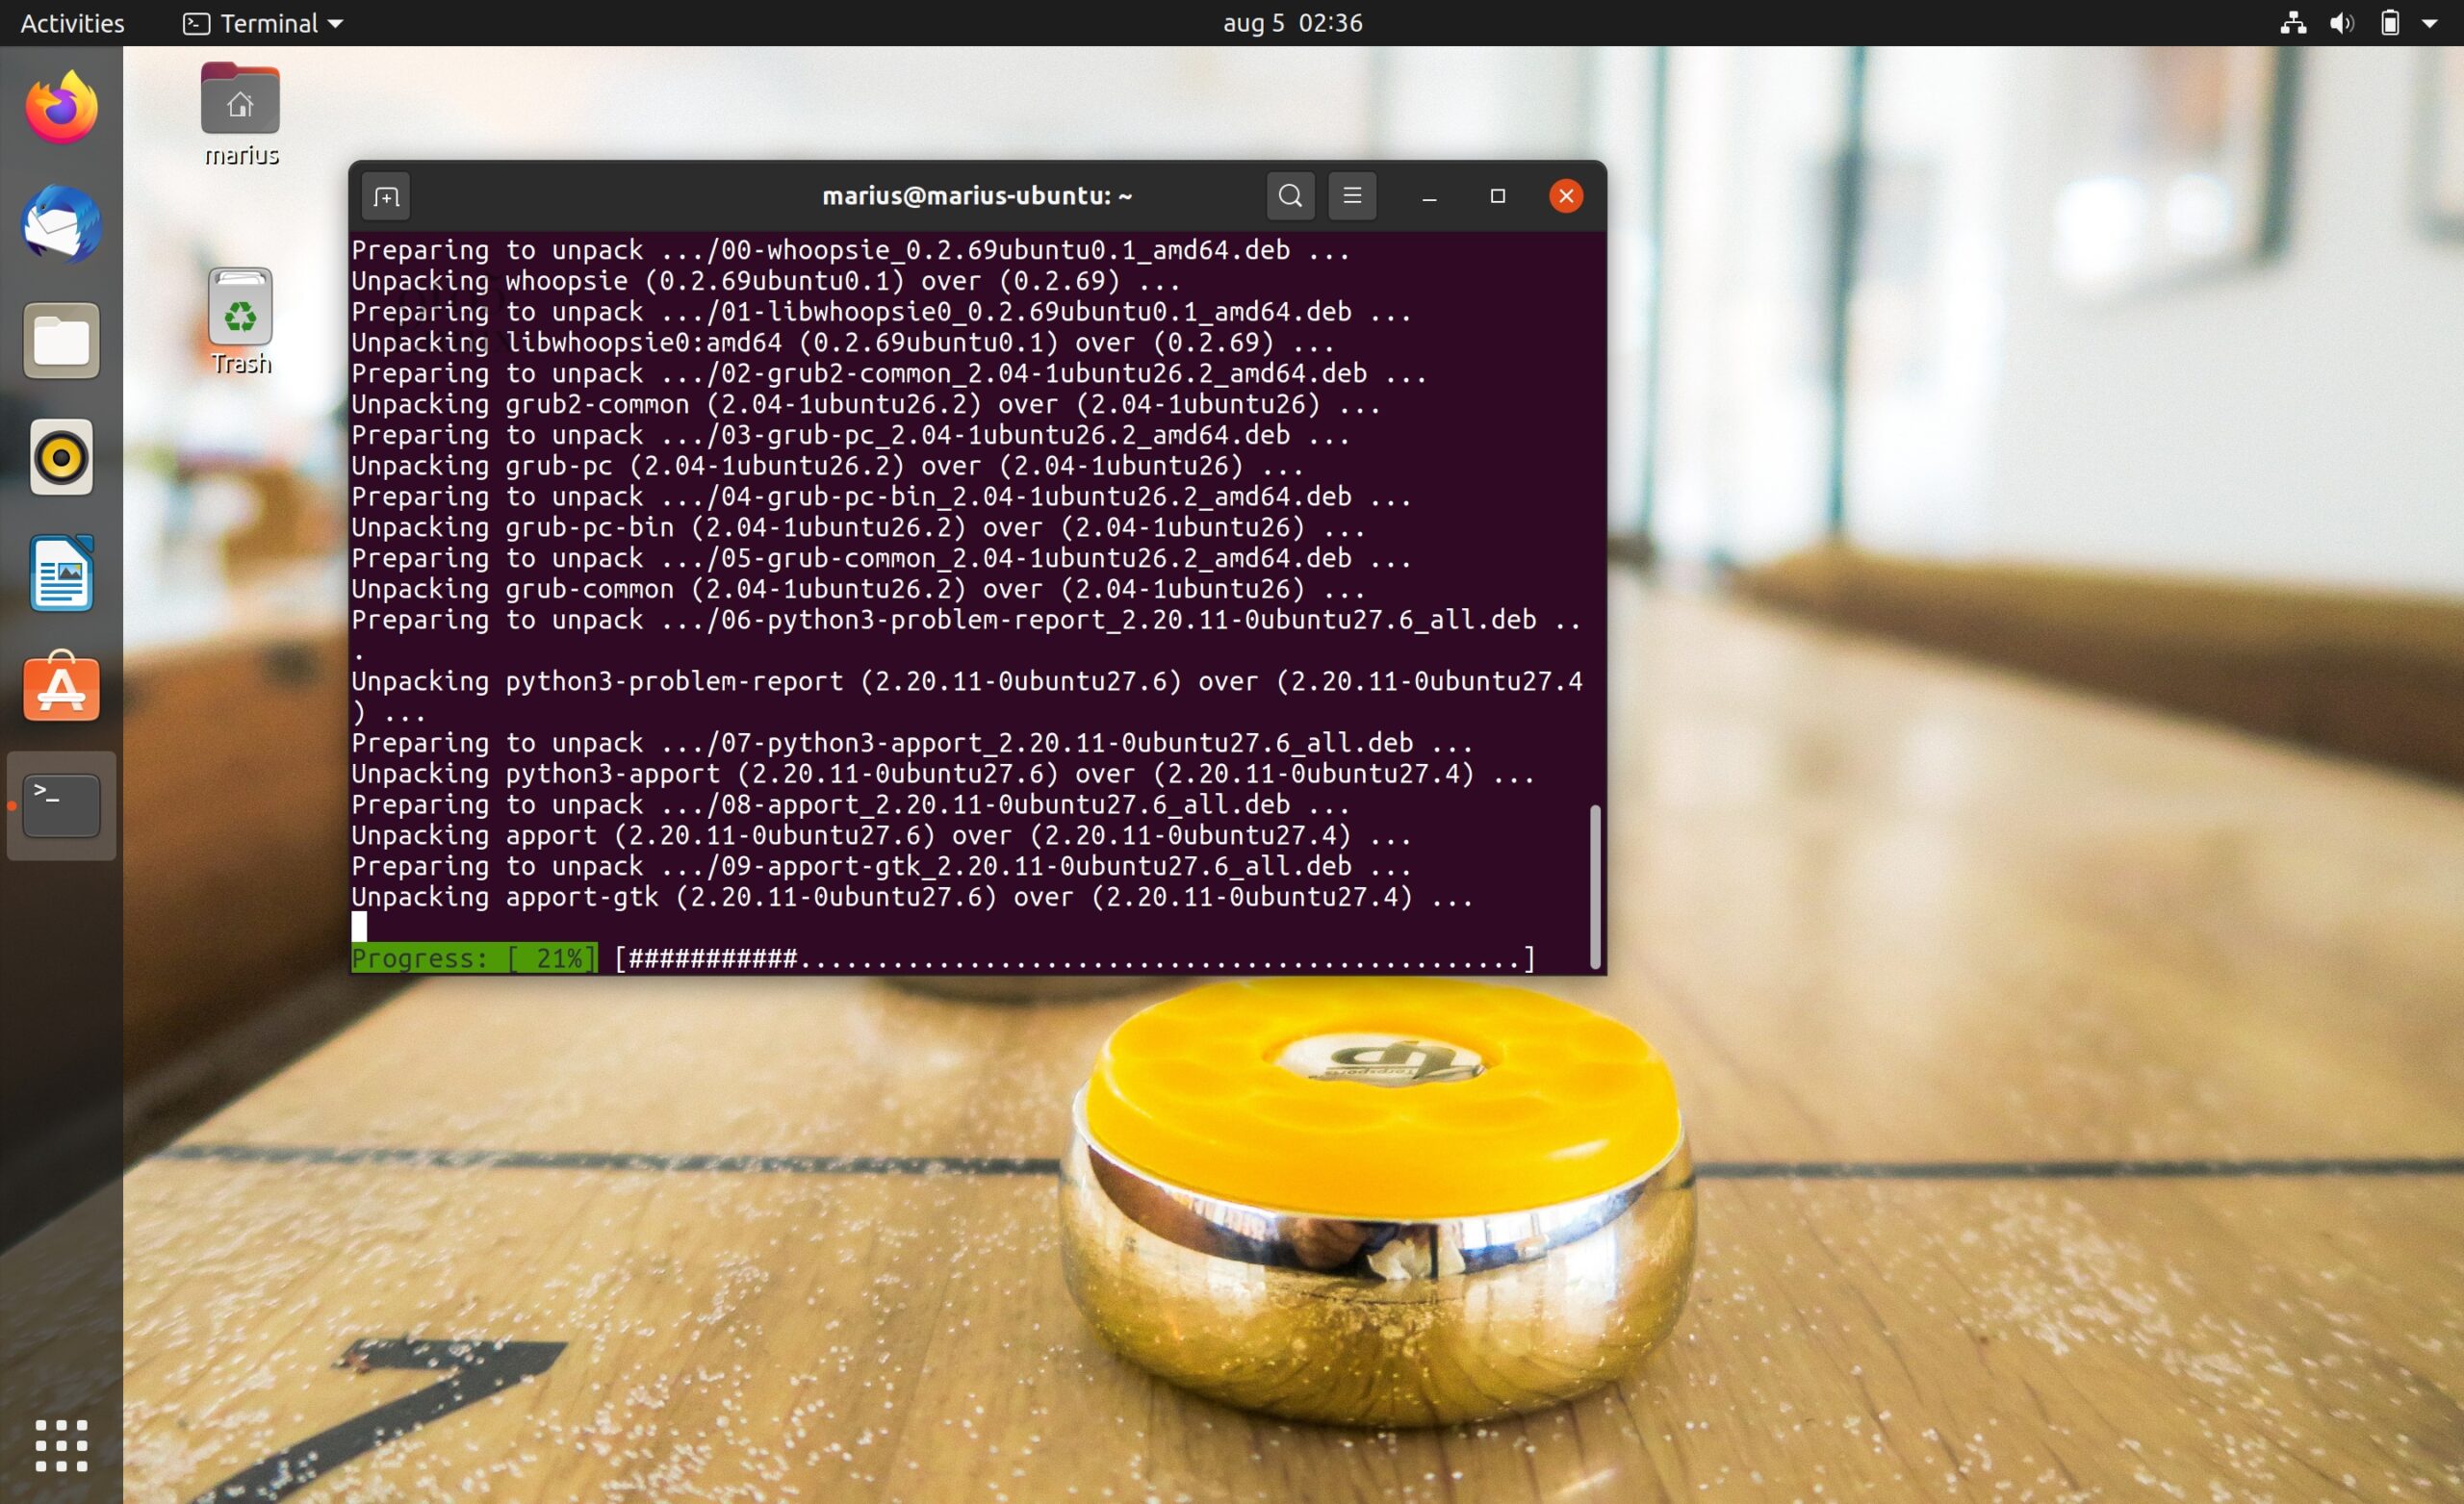 GRUB2 Boot Failure Issues Fixed in Debian and Ubuntu, Update Now